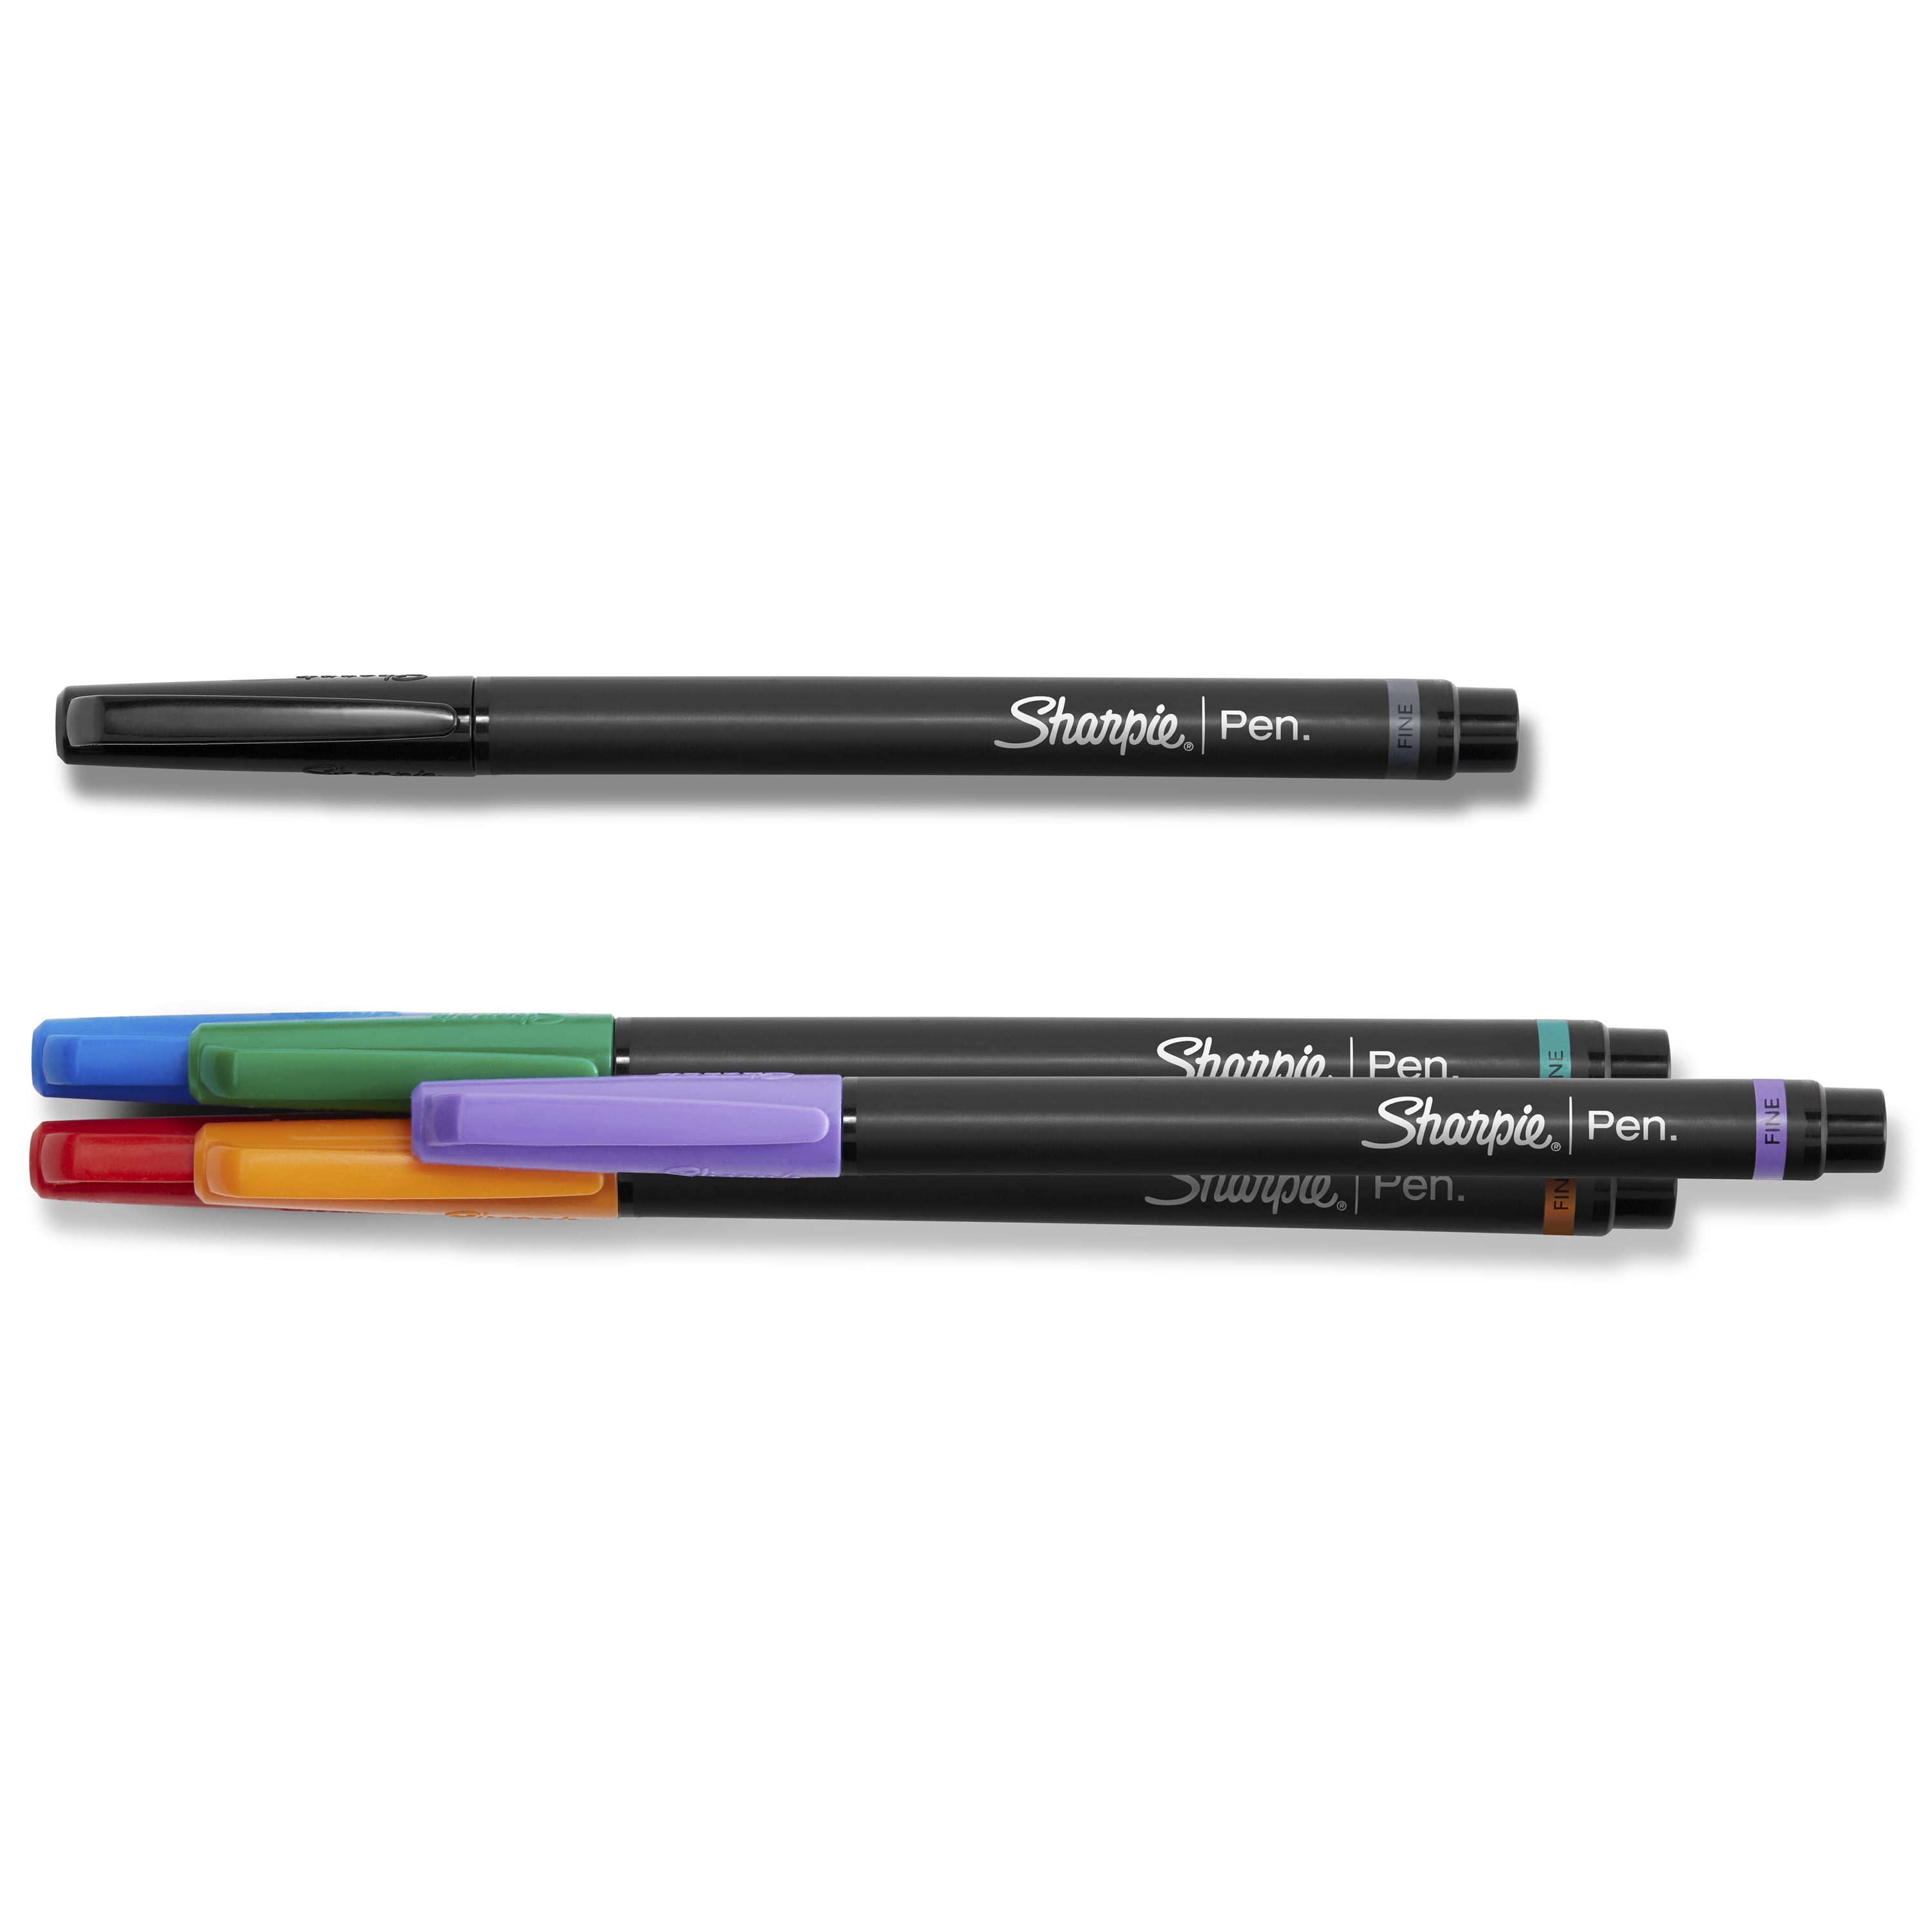 Sharpie 730419 Pen. Felt Pens Fine Point Black Ink 4 Pack (1742661)